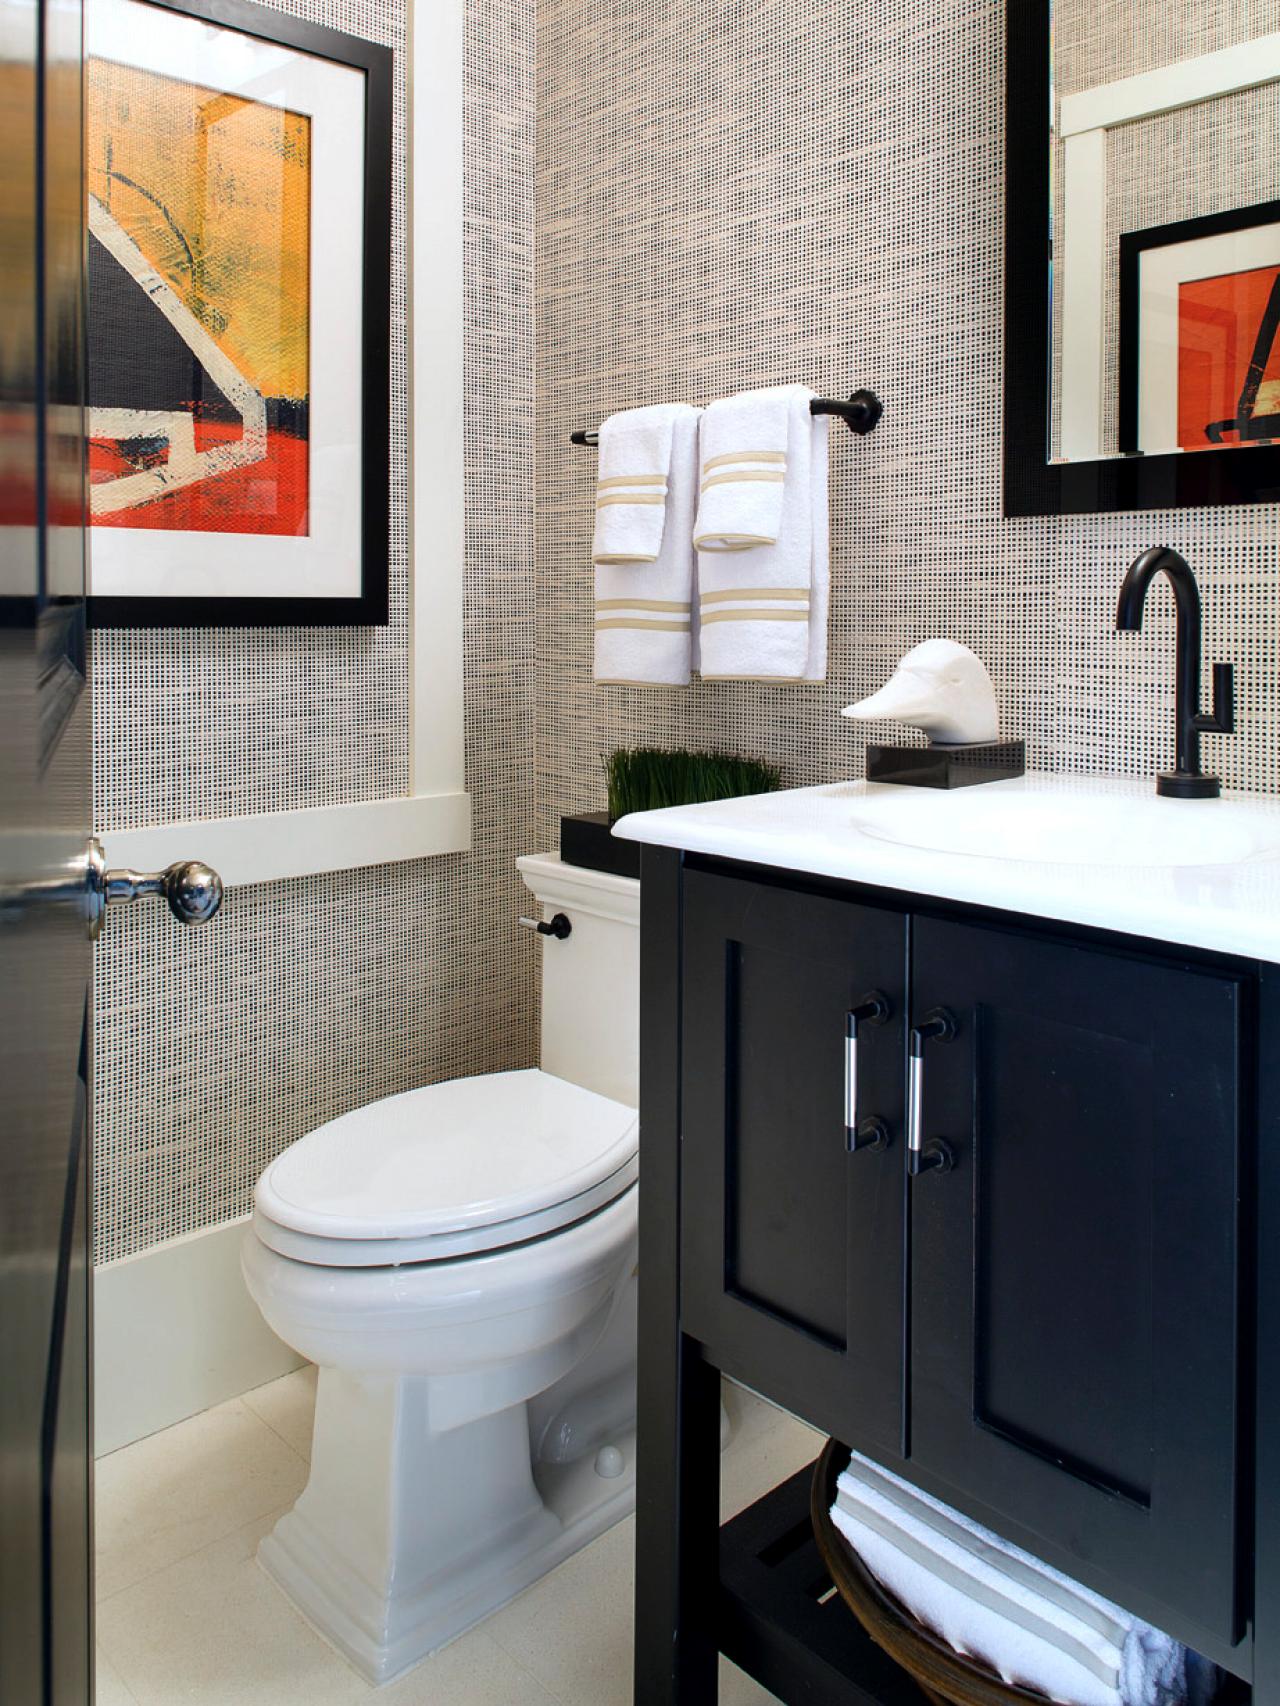 wallpaper for small bathrooms,bathroom,room,property,sink,tile